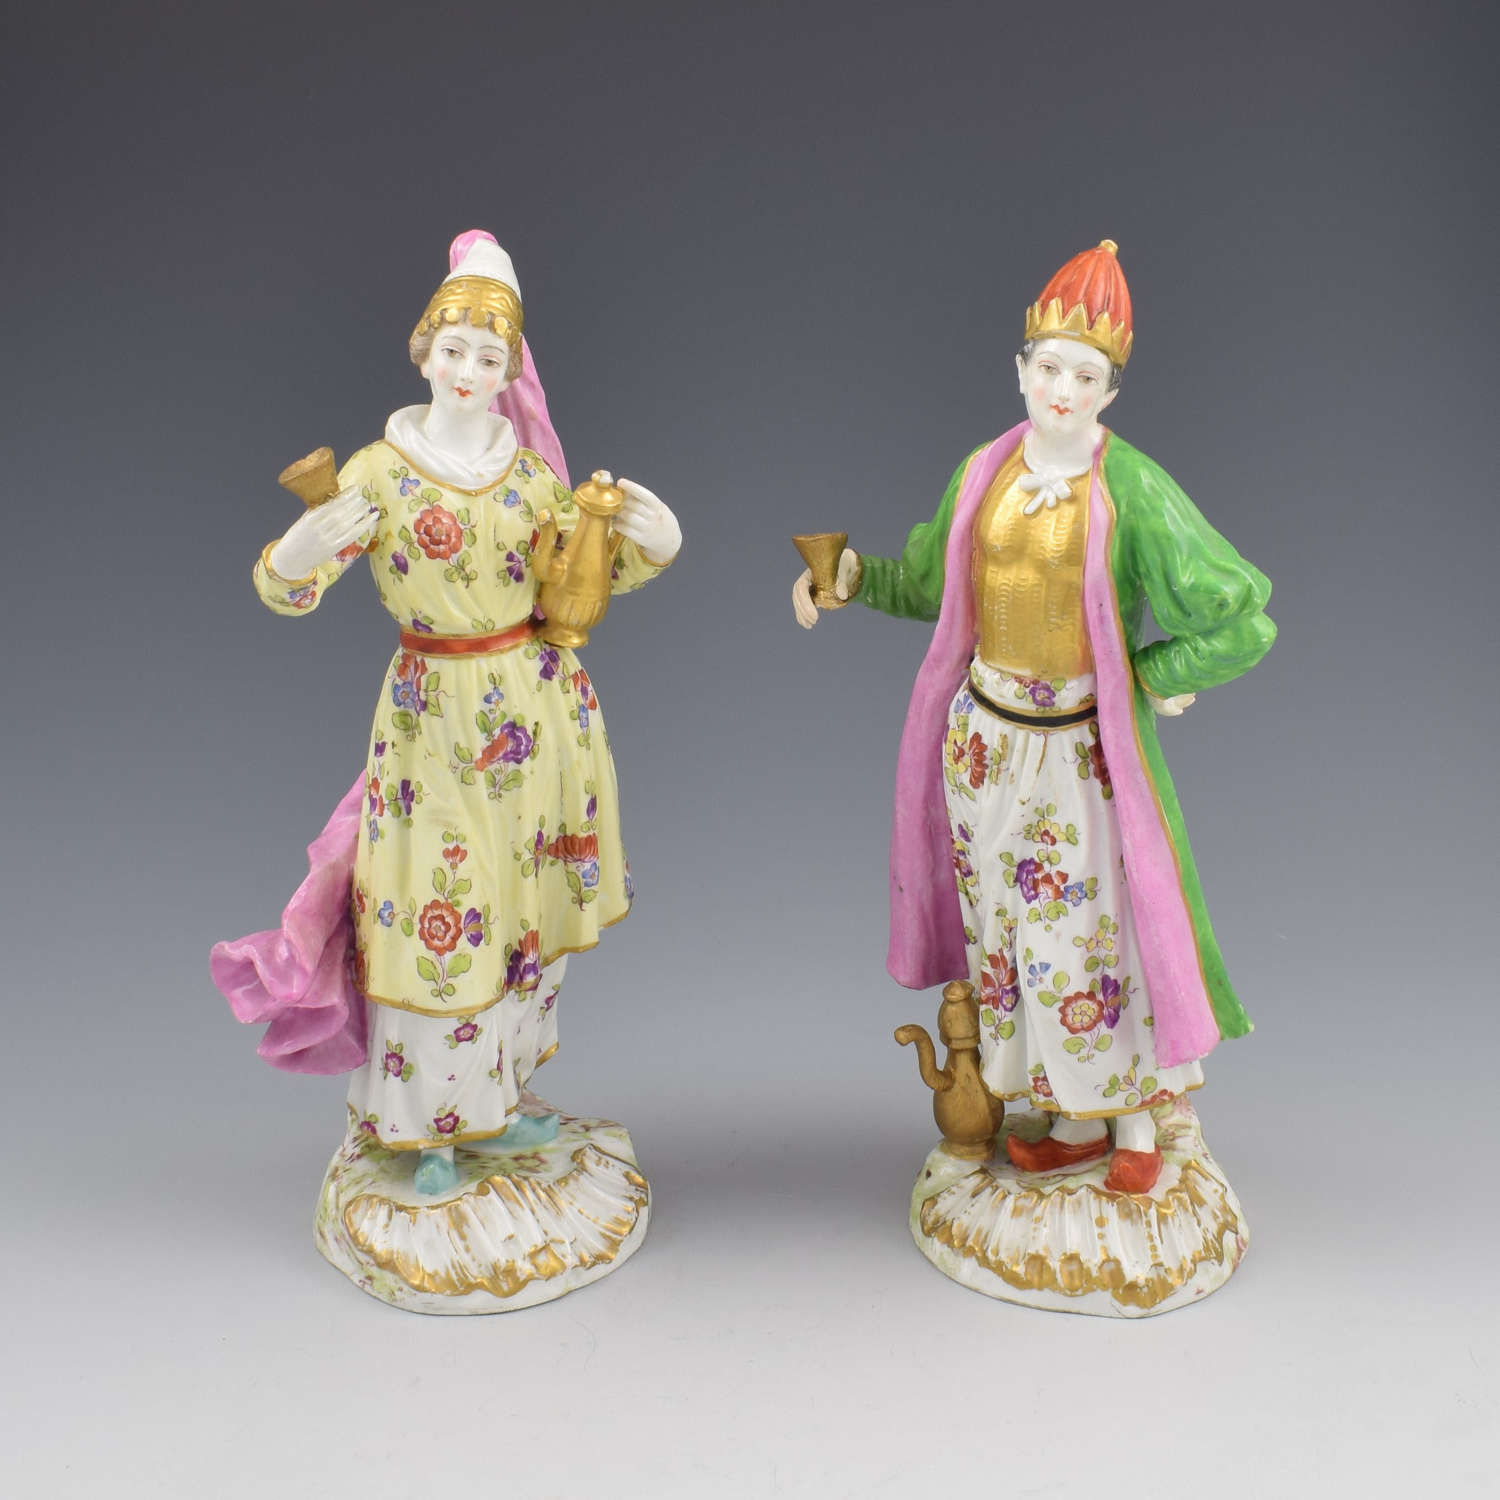 Pair Of Samson Porcelain Figures Of Ottomans / Turks After Meissen